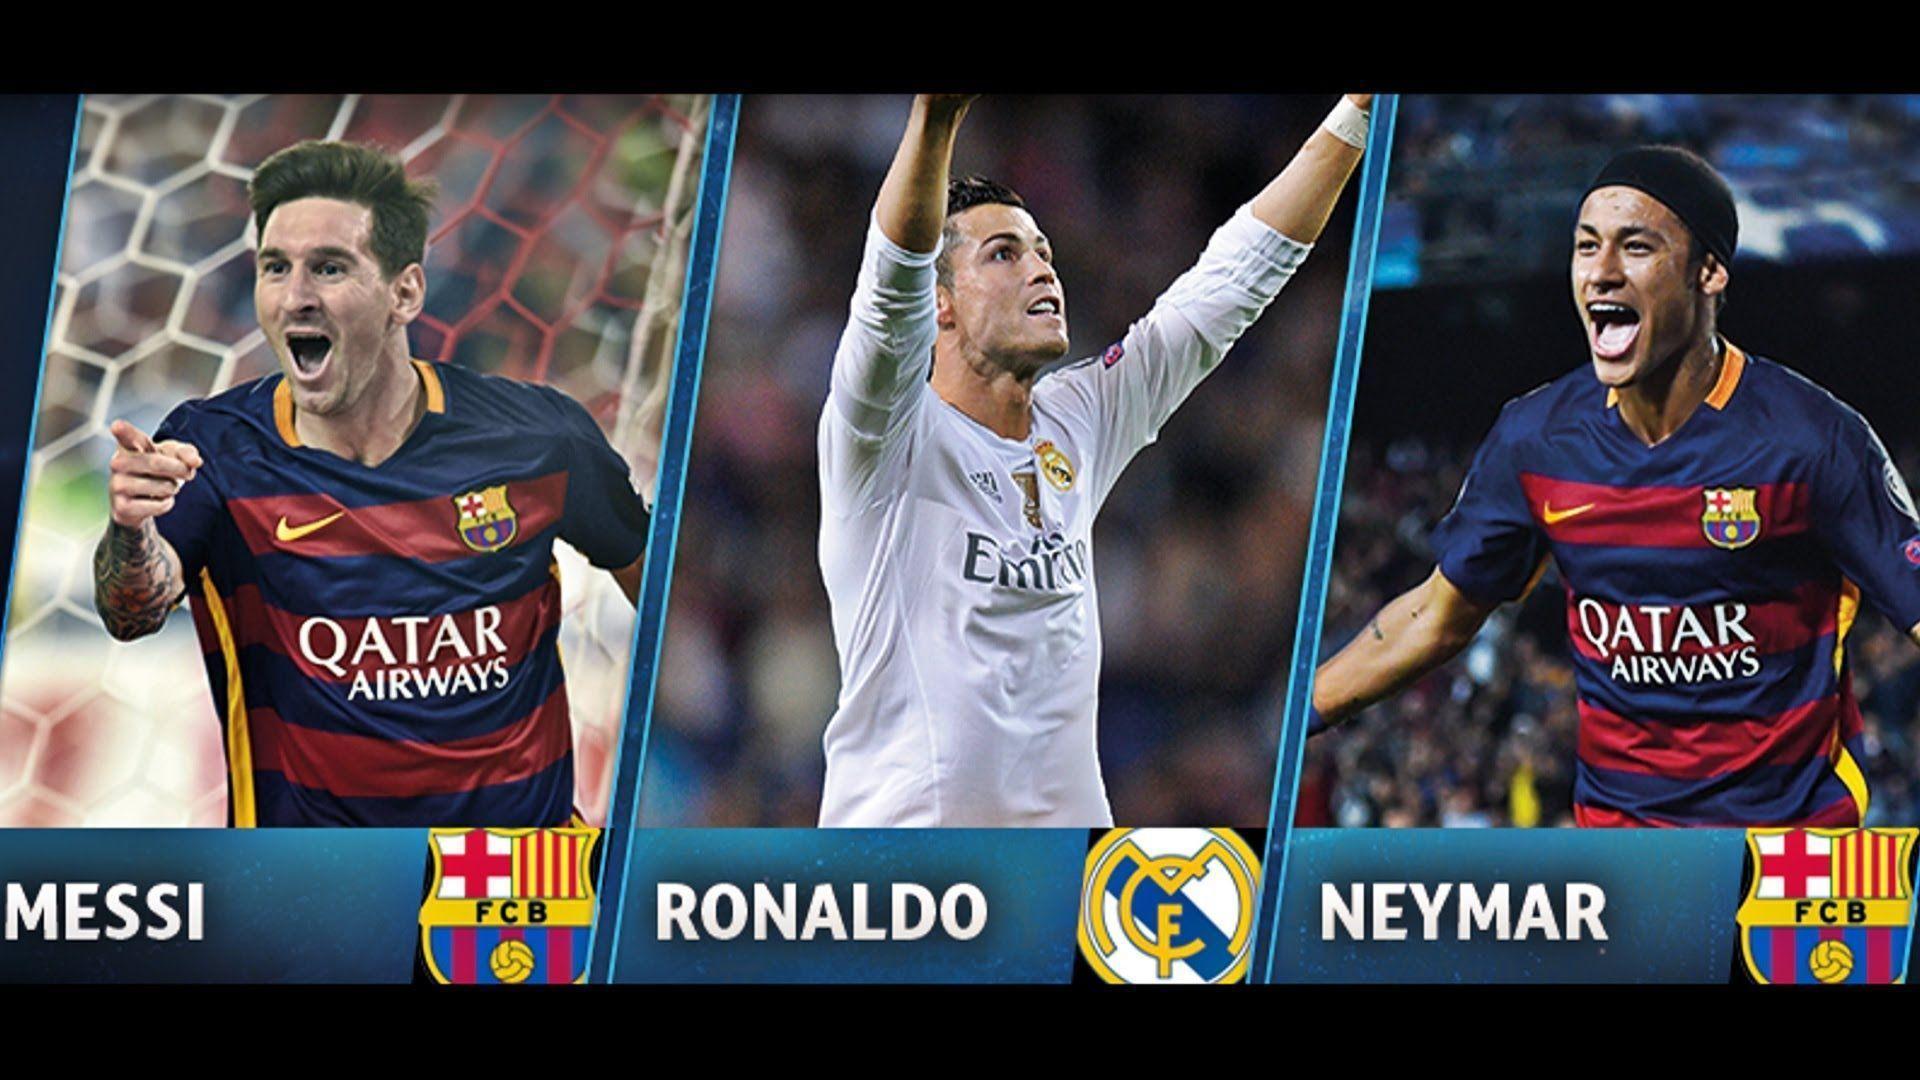 Ballon D&;Or 2015 vs Ronaldo vs Neymar. Who wins?